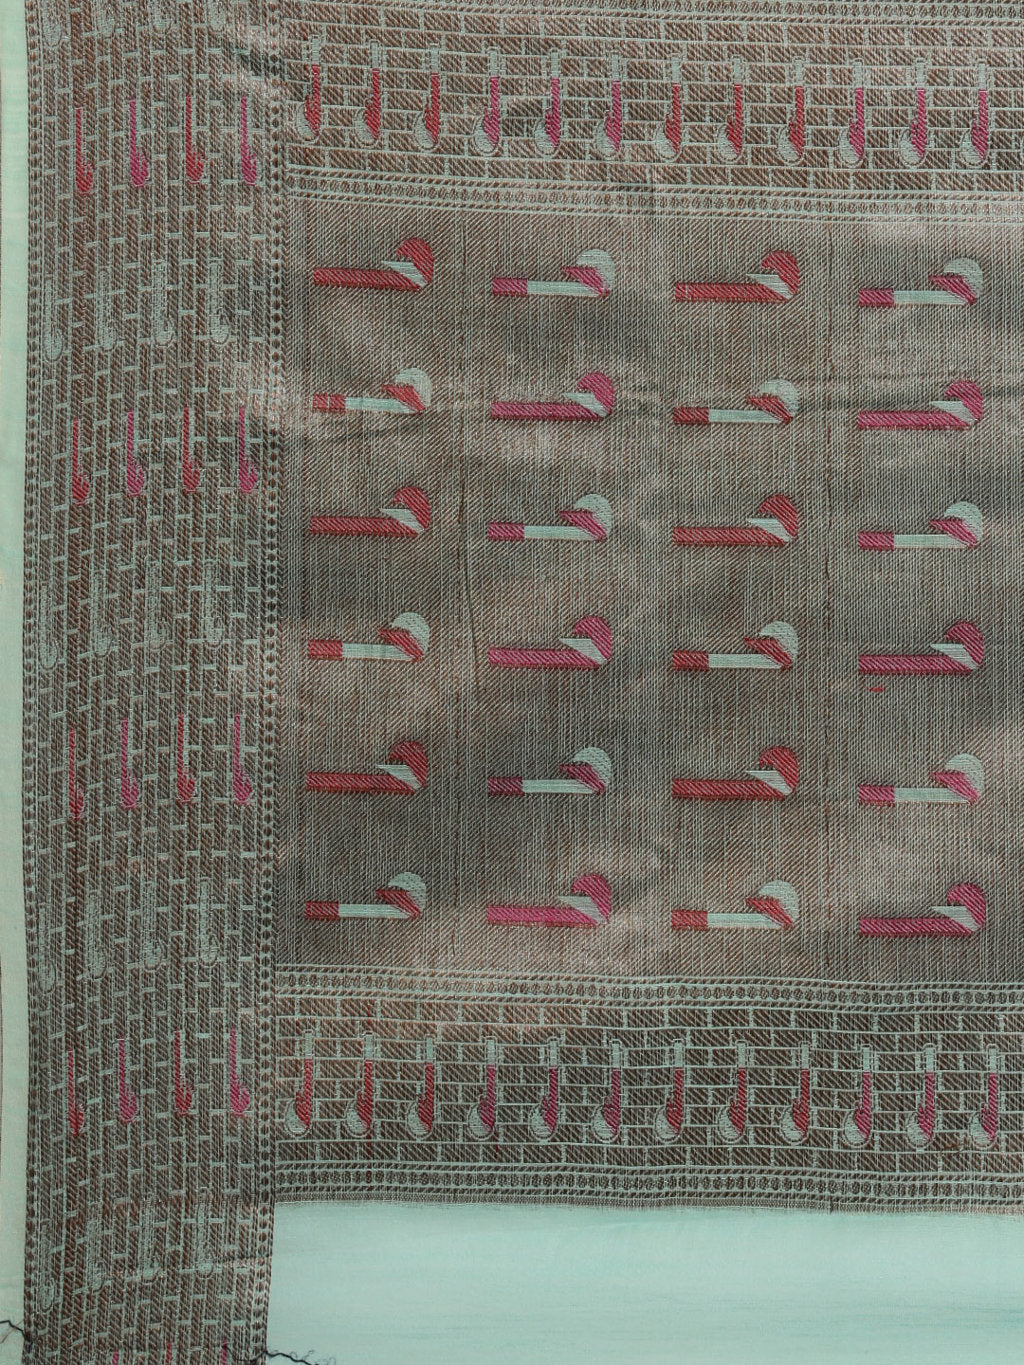 Women's Sea Green Cotton Handloom Woven Work Traditional Saree - Sangam Prints